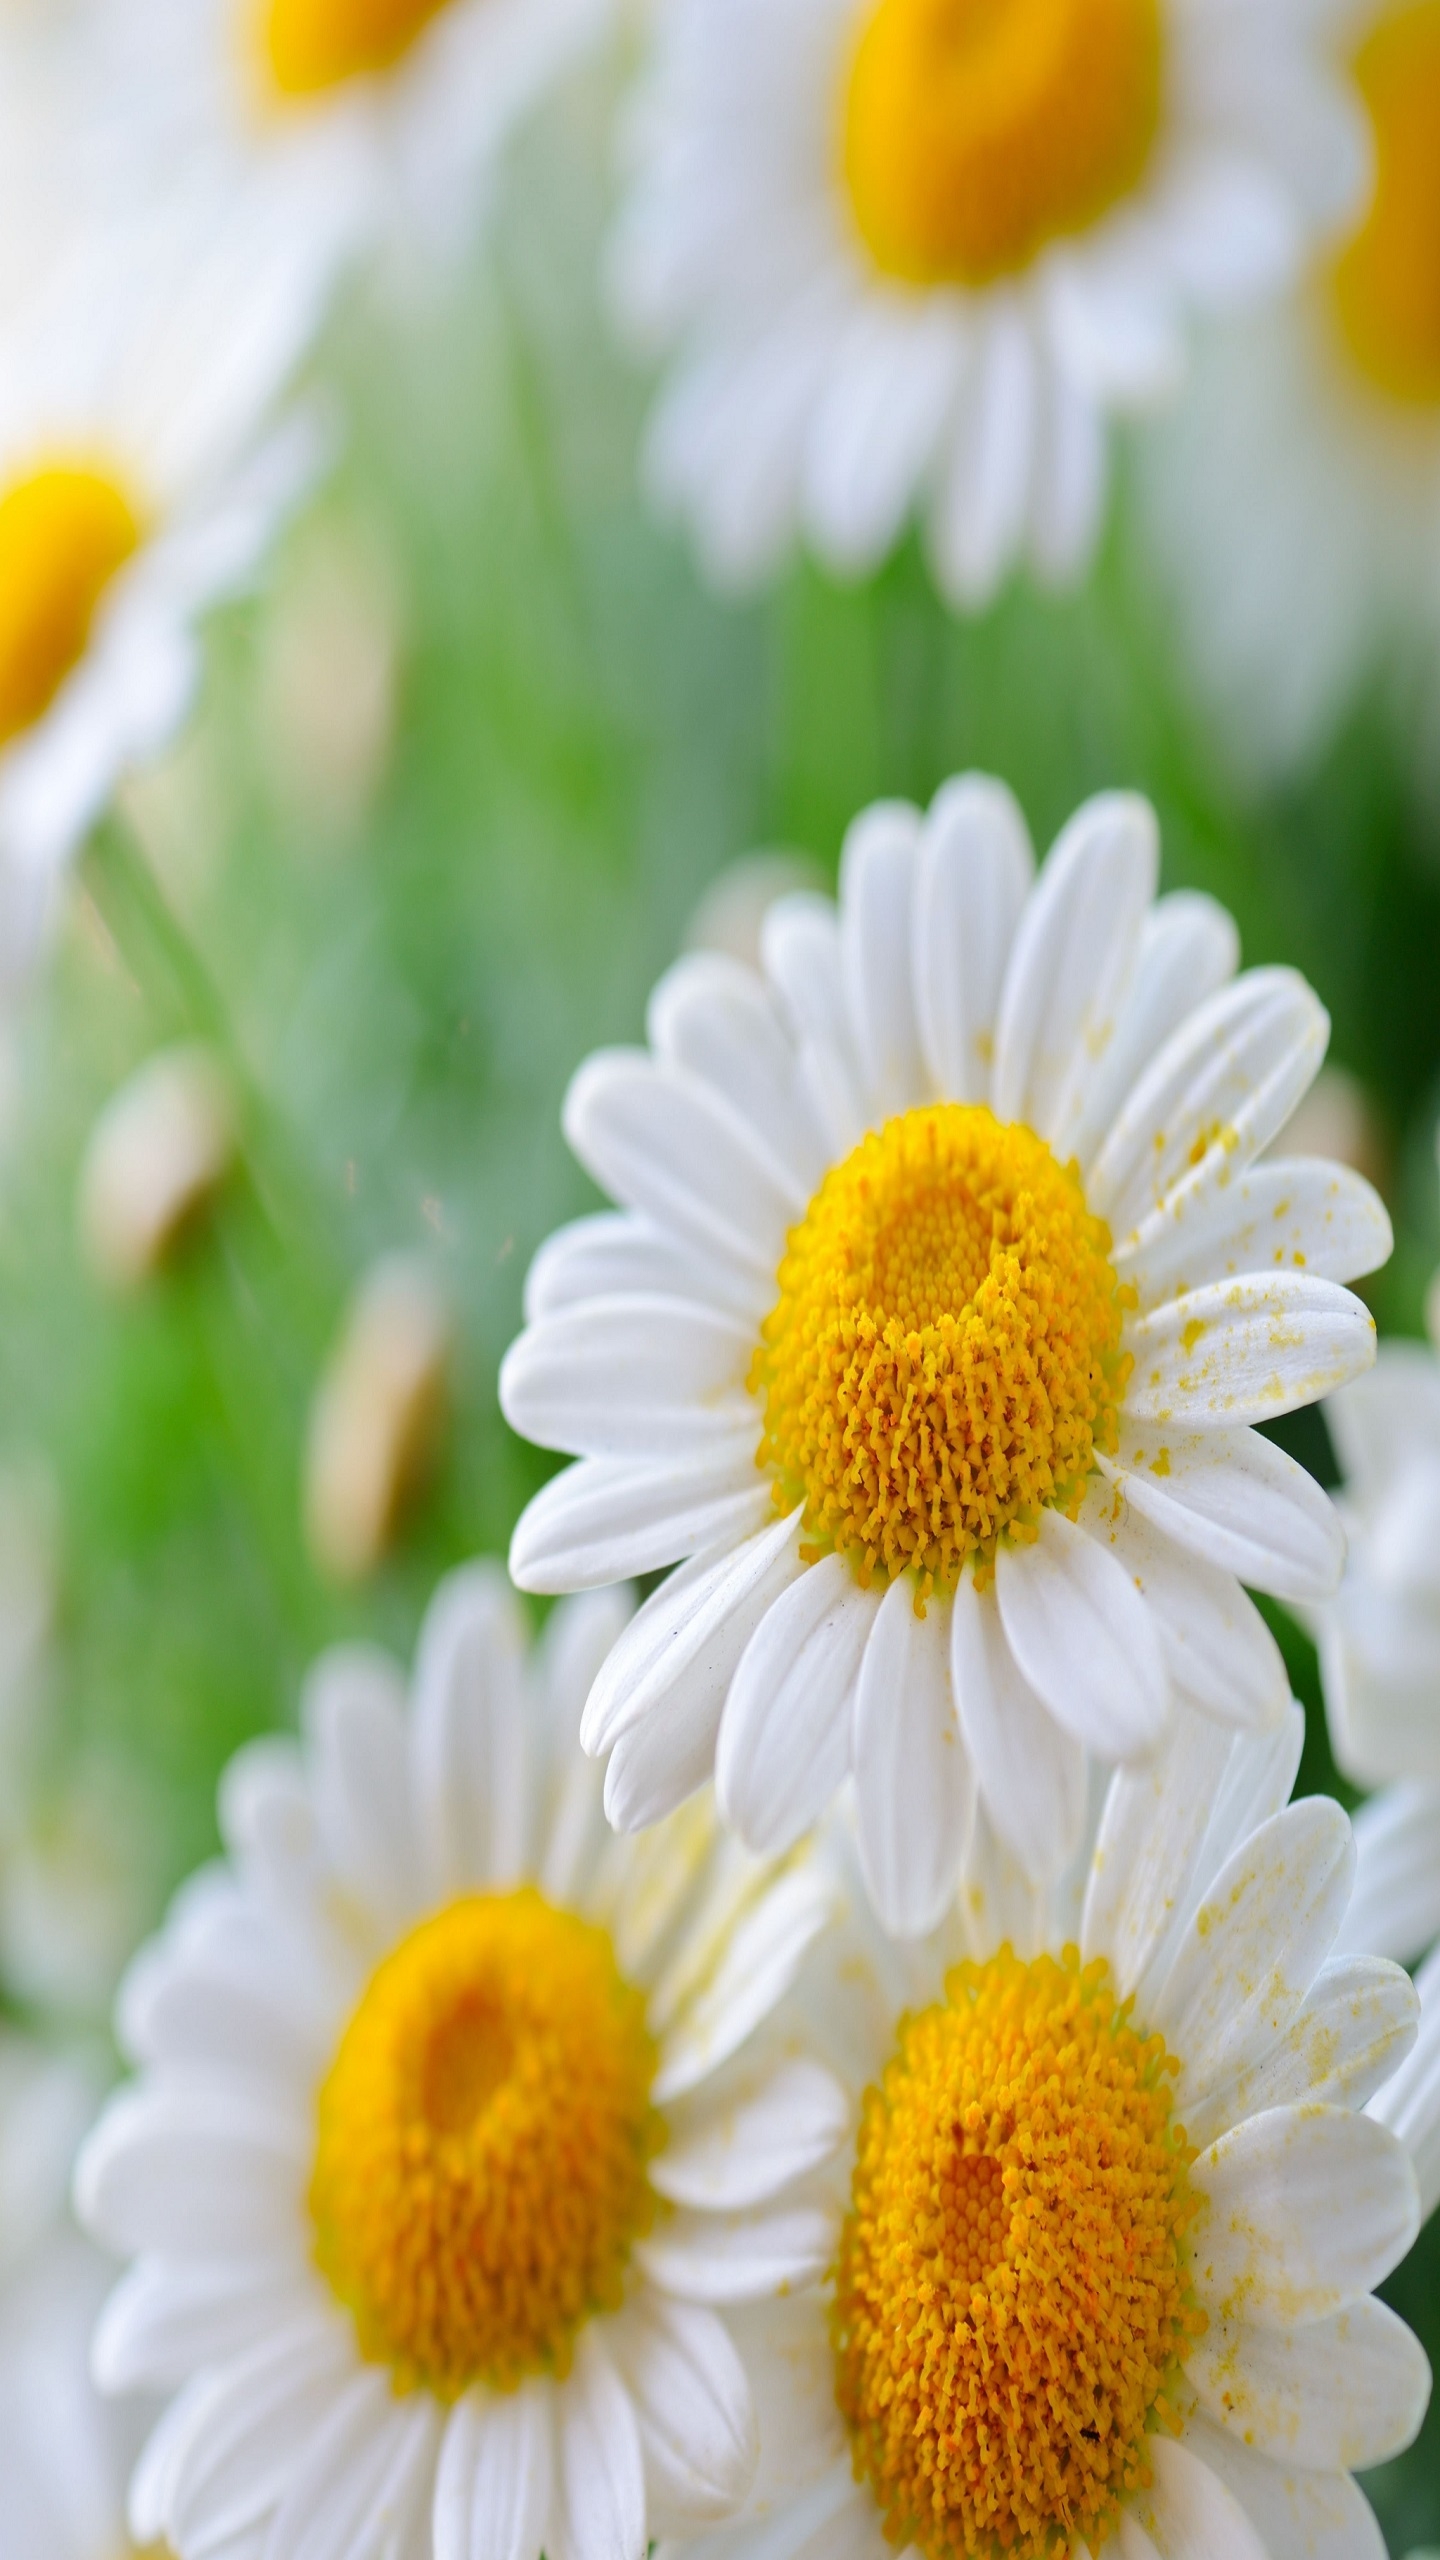 Daisy Flower for Samsung S7 & S7 Edge resolution